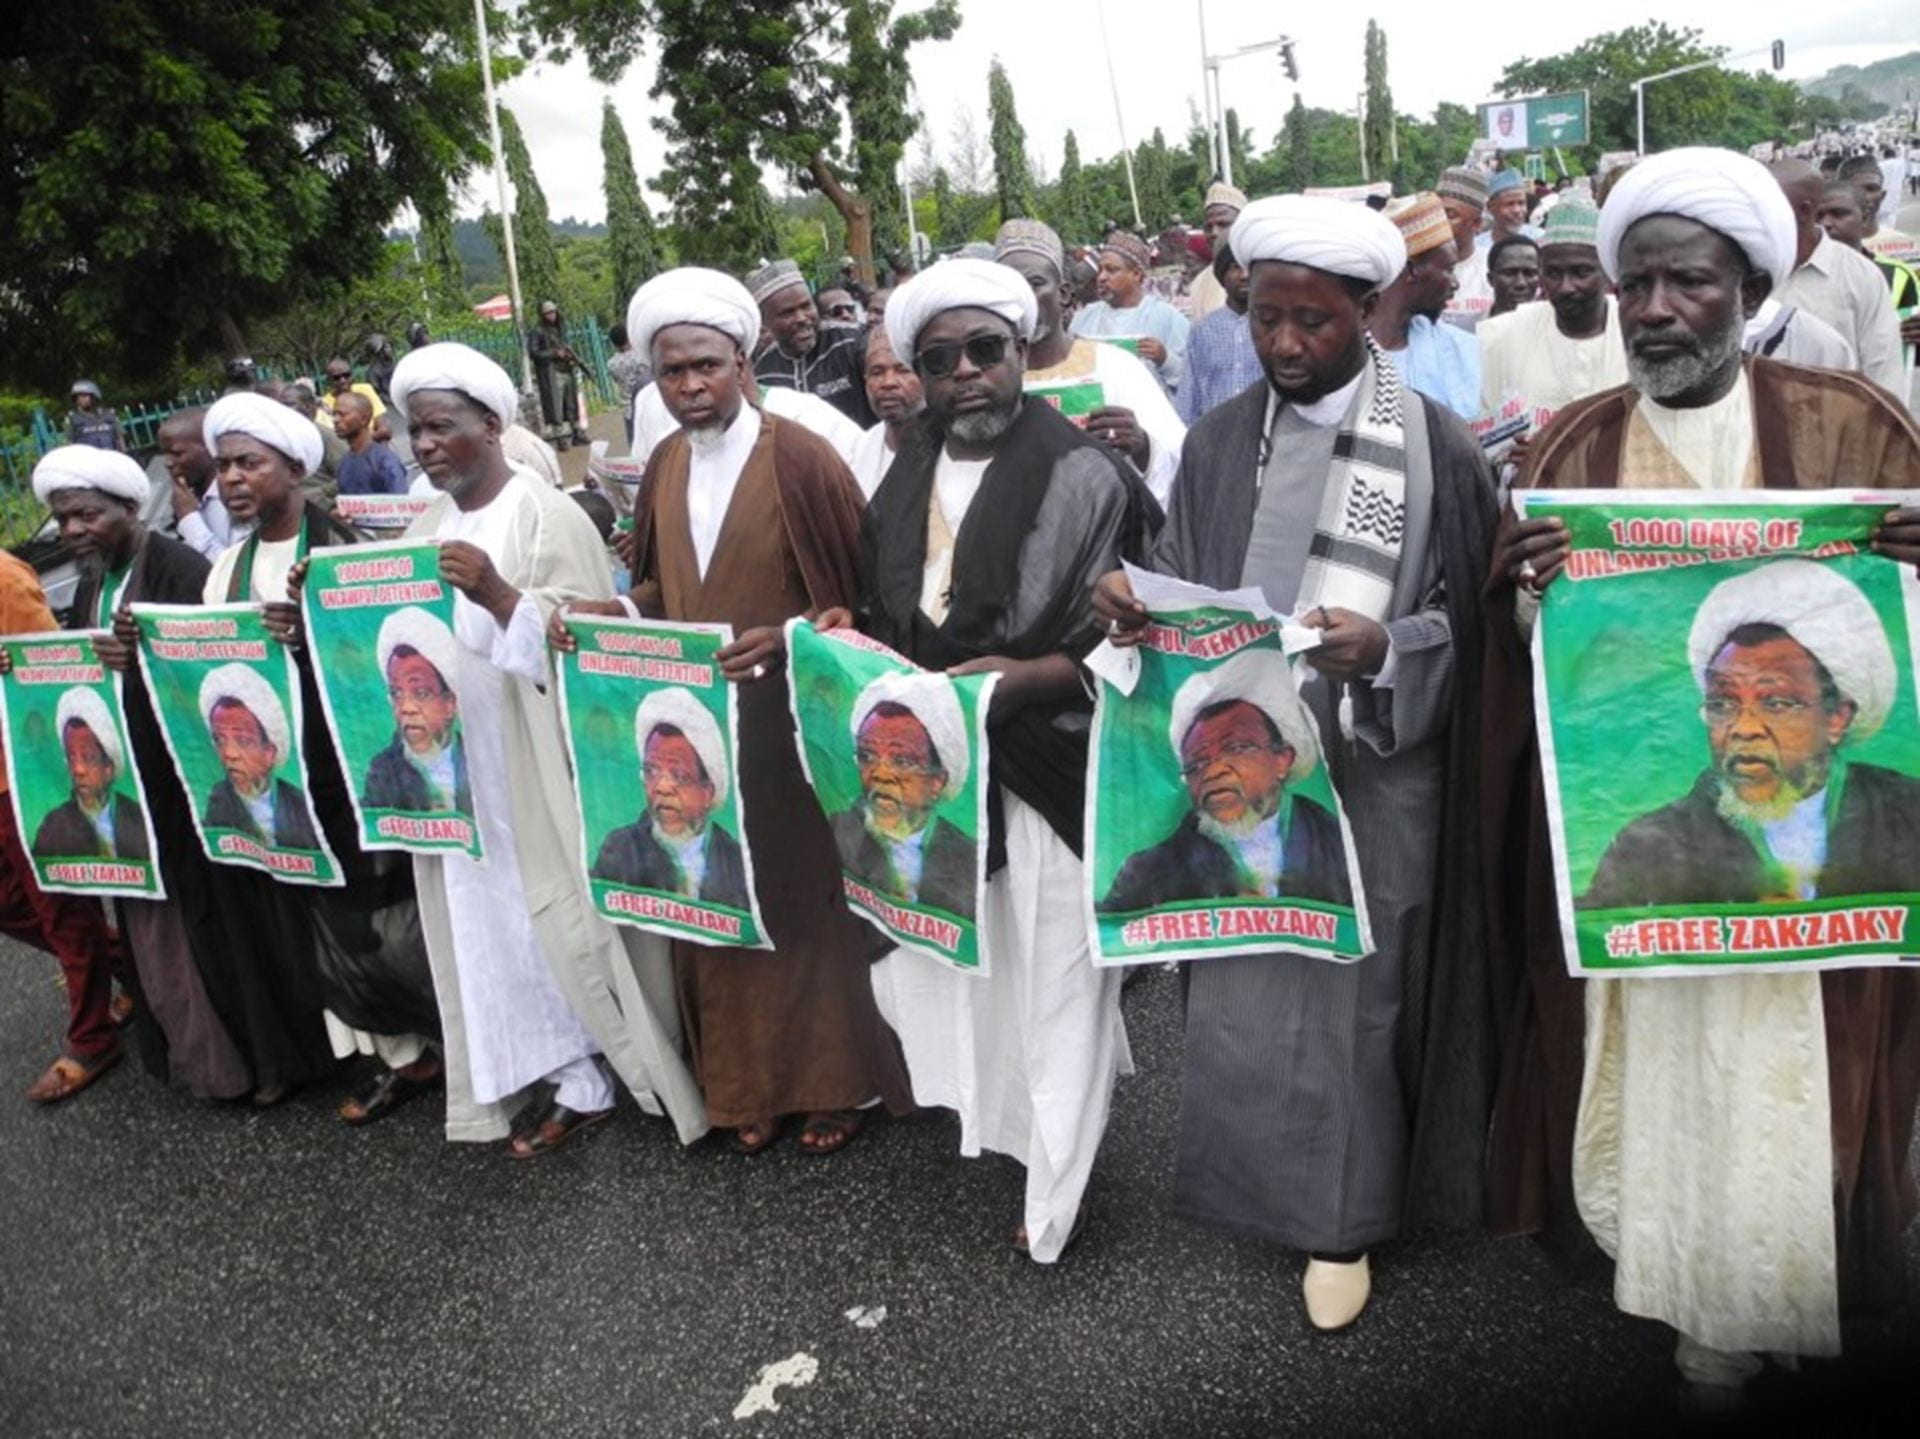 Islamic Movement in Nigeria